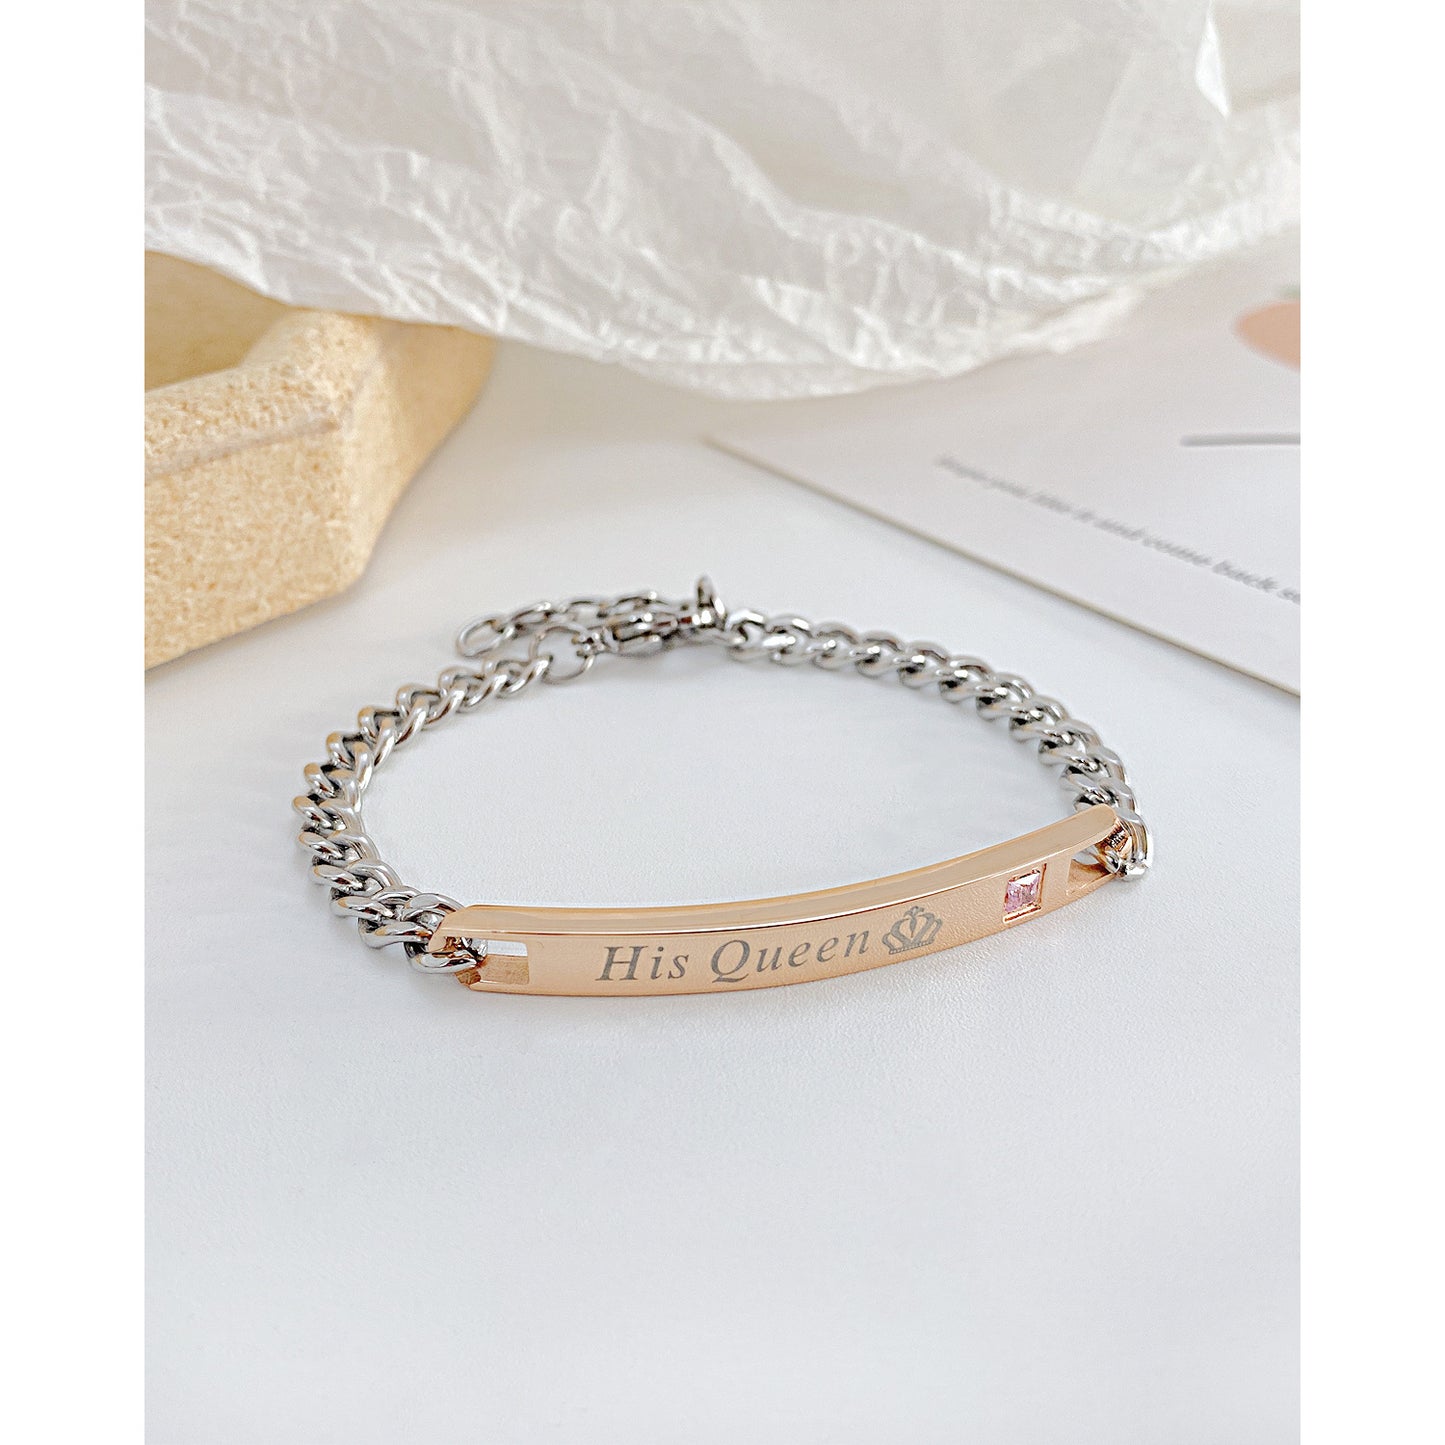 Accessories Romantic Valentine's Day Gift Fashion Bracelets